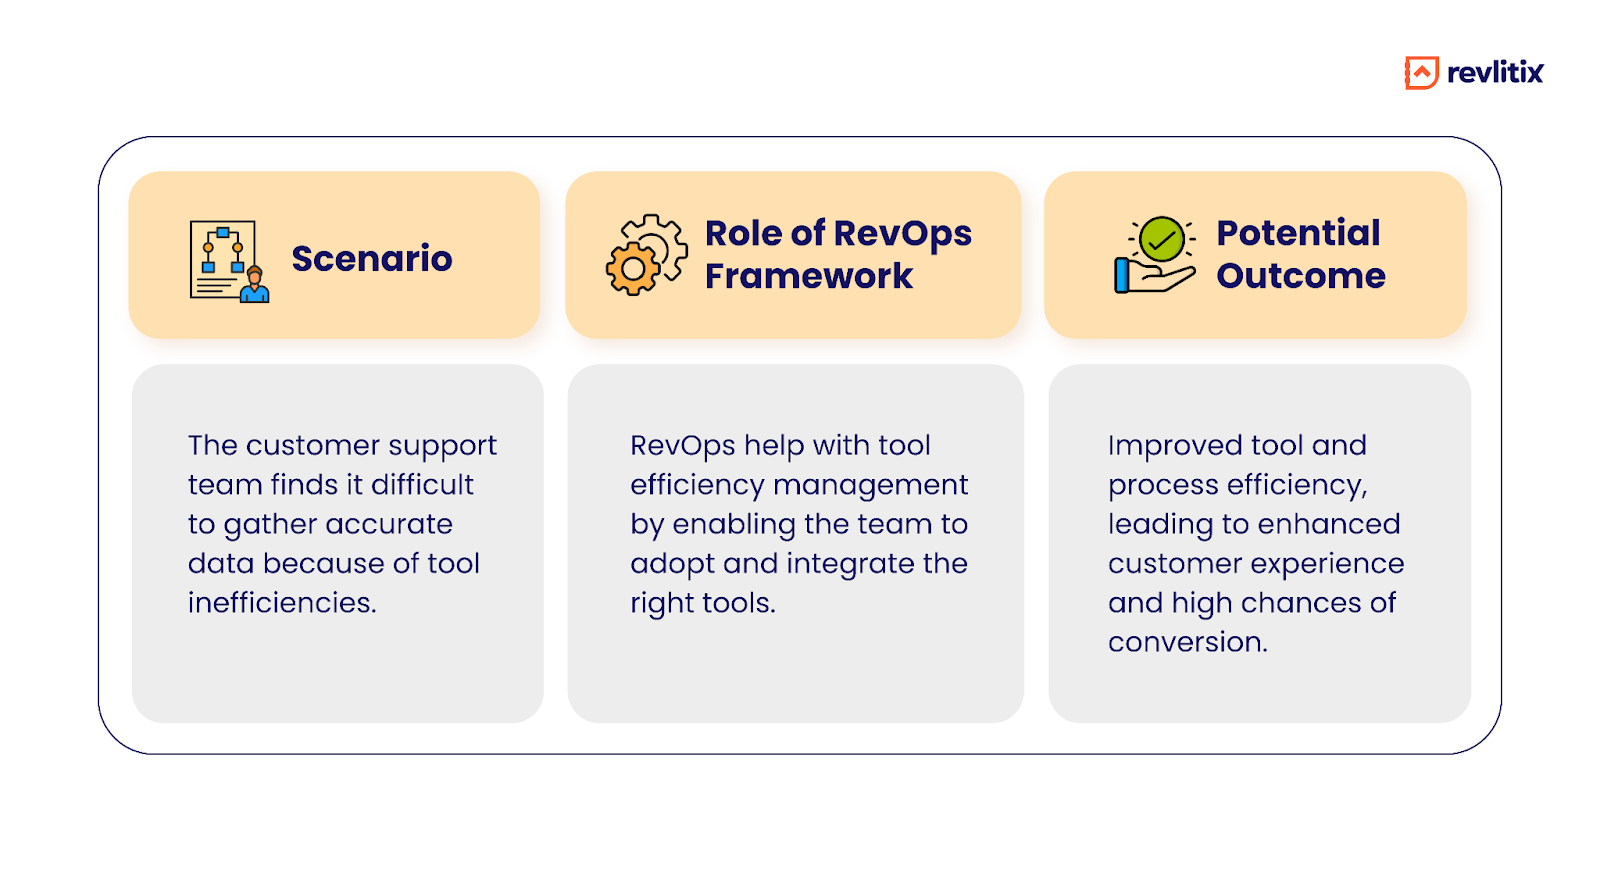 RevOps enhancing customer experience